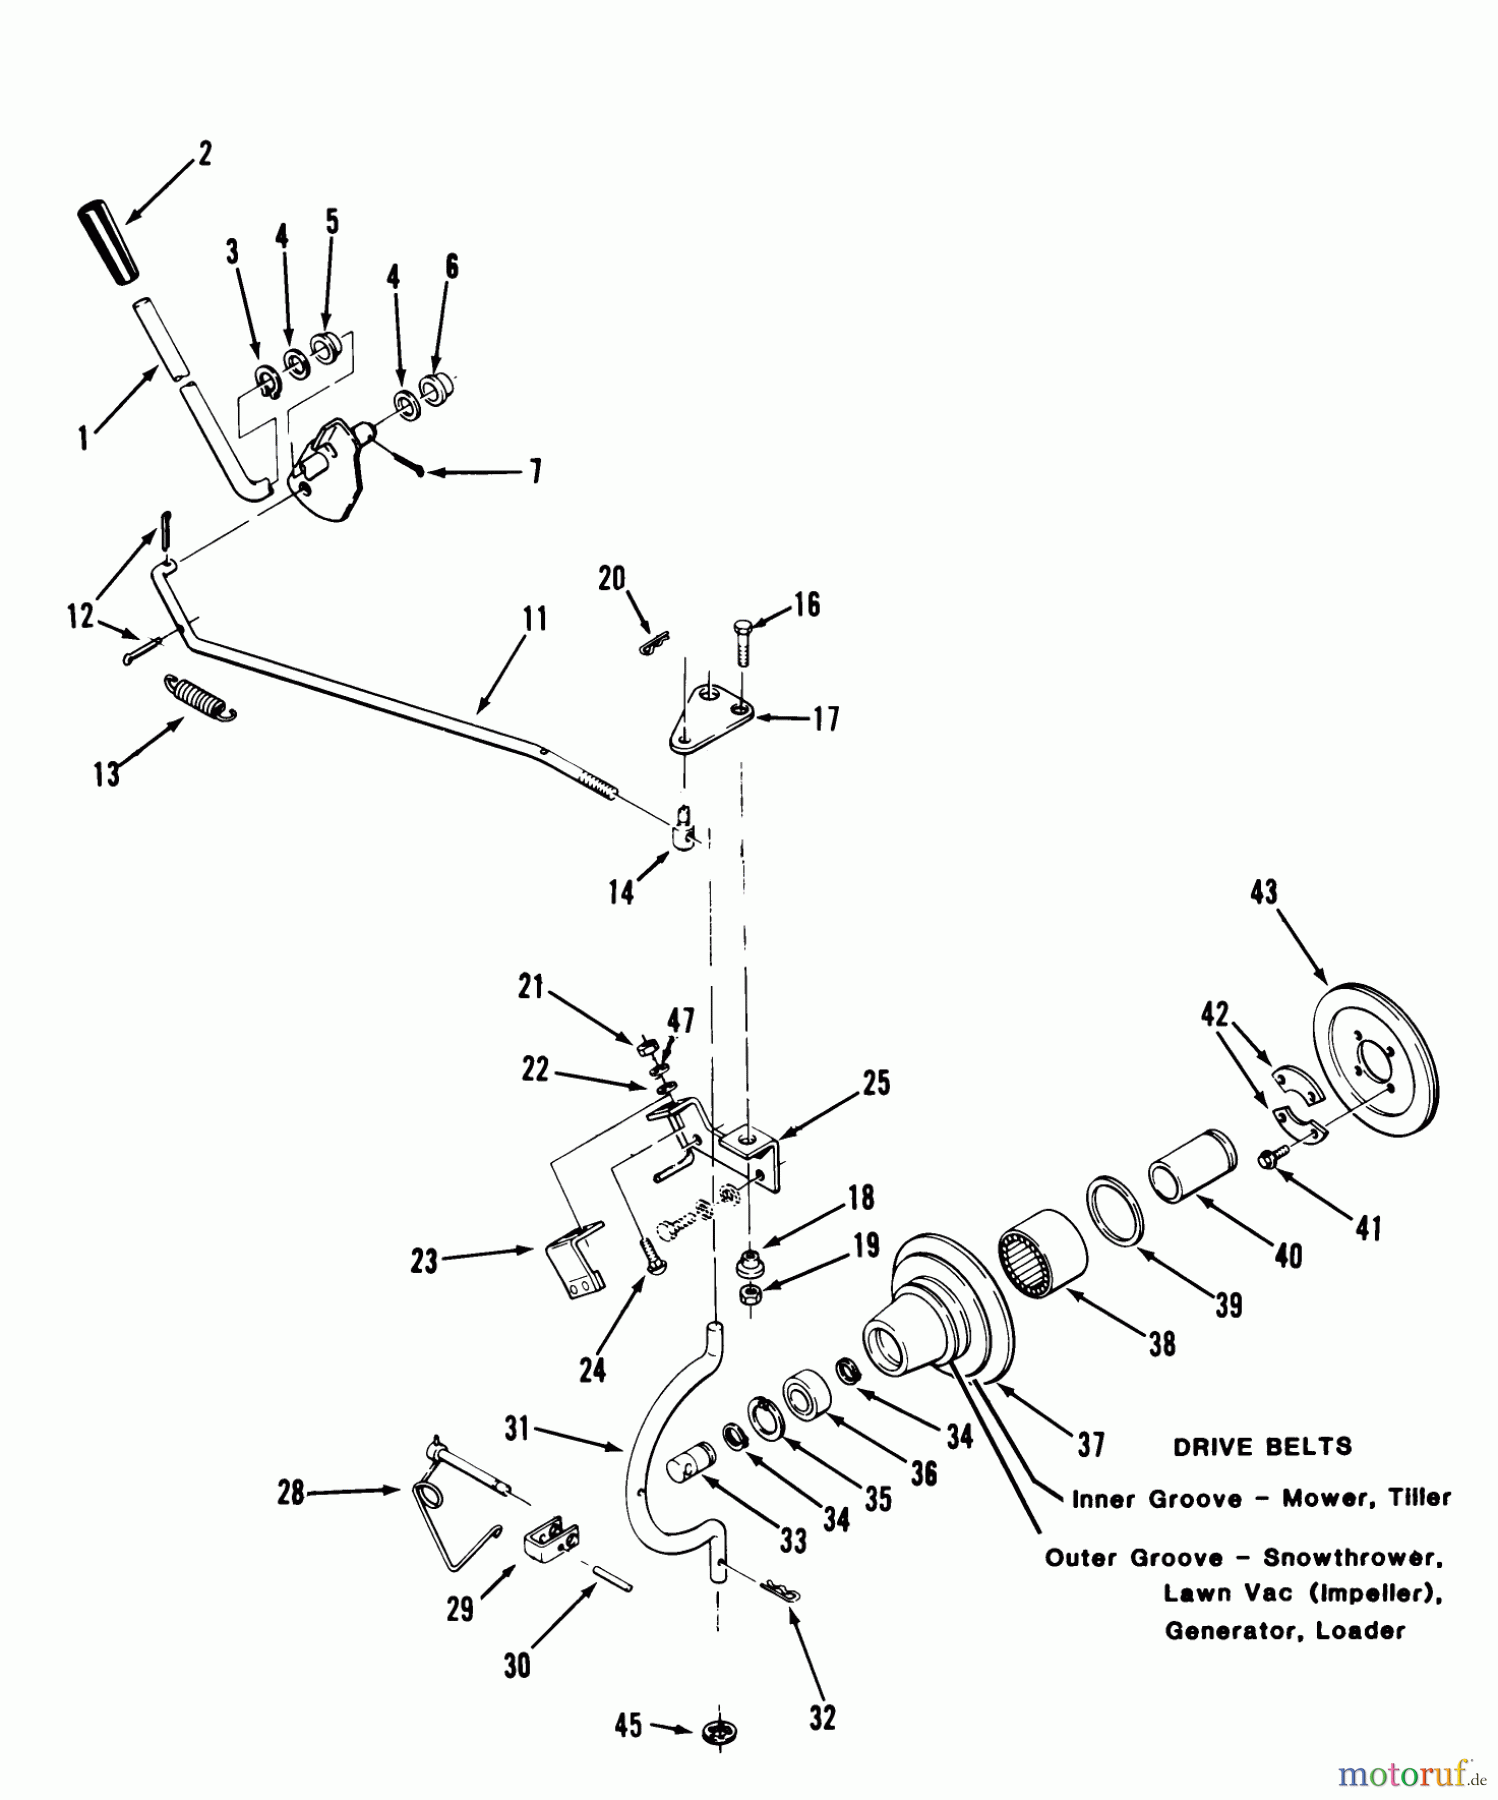  Toro Neu Mowers, Lawn & Garden Tractor Seite 1 31-18OE01 (518-H) - Toro 518-H Garden Tractor, 1988 PTO CLUTCH AND CONTROL